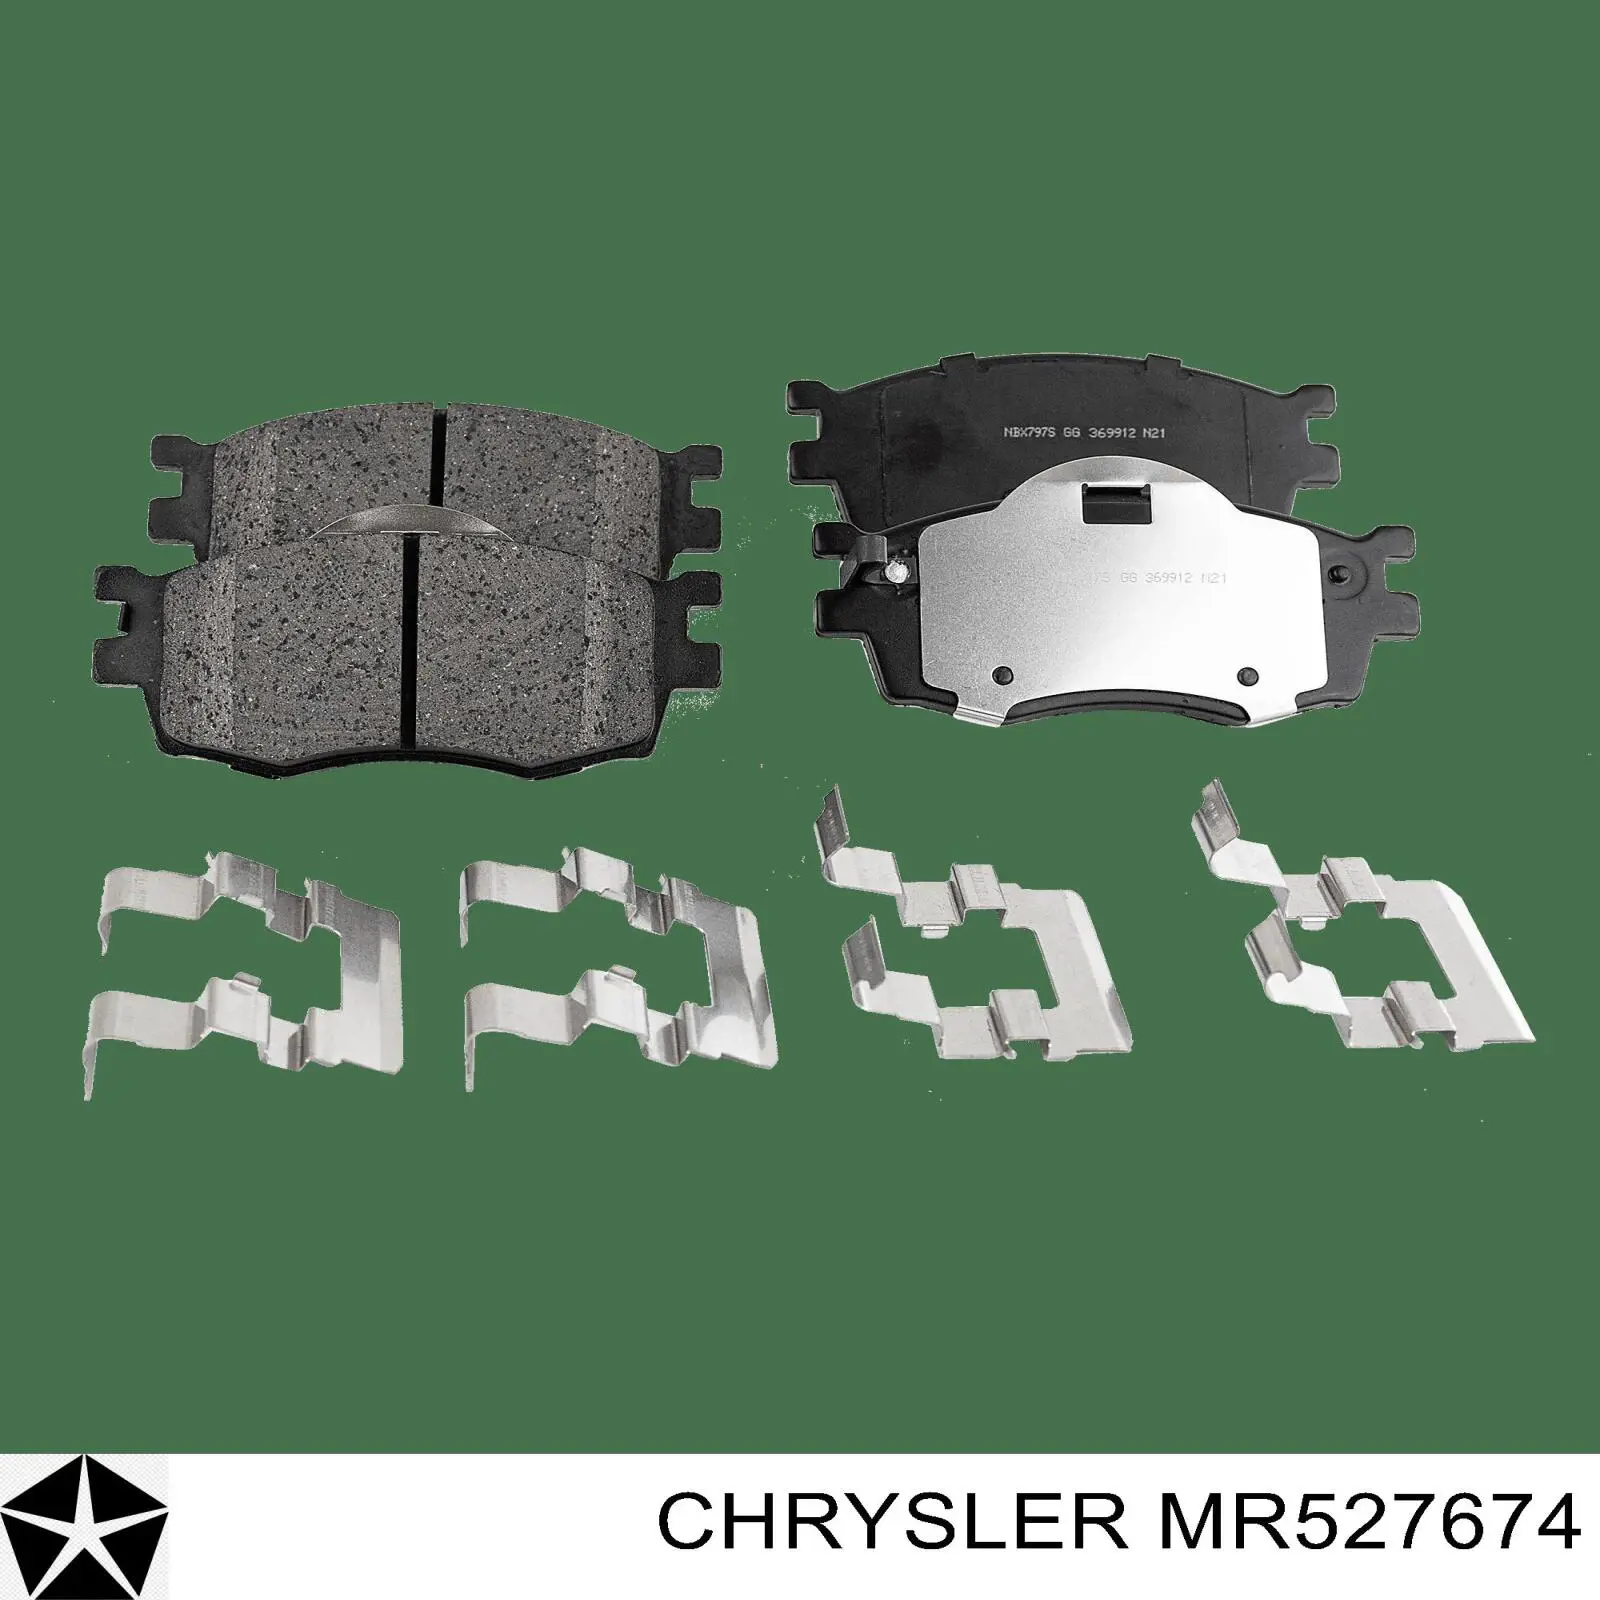 MR527674 Chrysler pastillas de freno delanteras